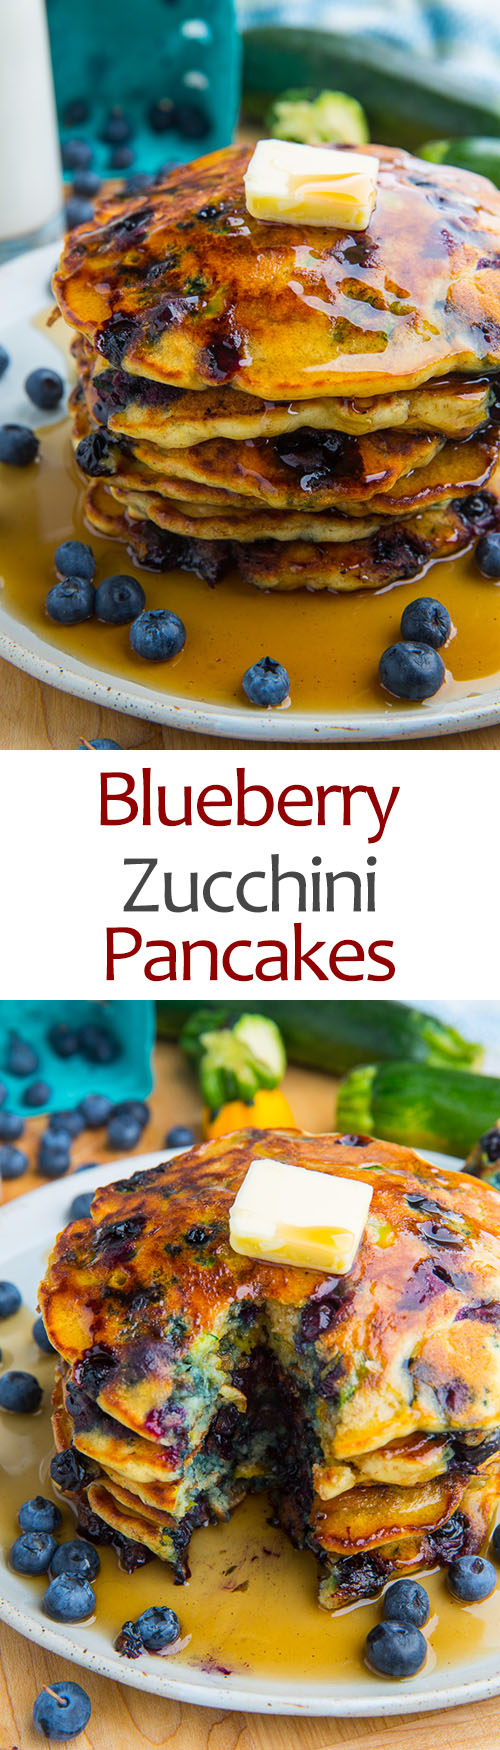 Blueberry Zucchini Pancakes